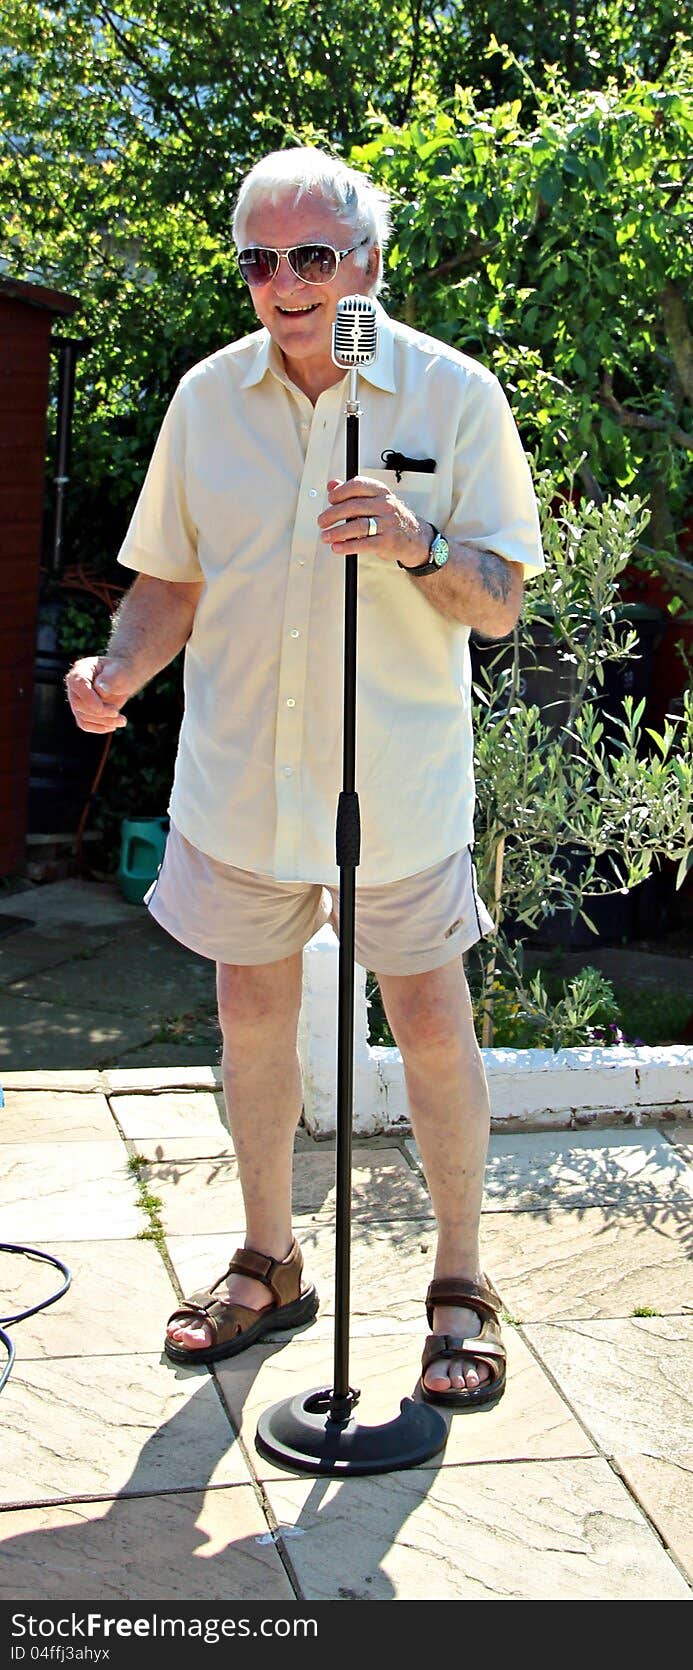 Photo of a pensioner having fun as a 1950's karaoke crooner.